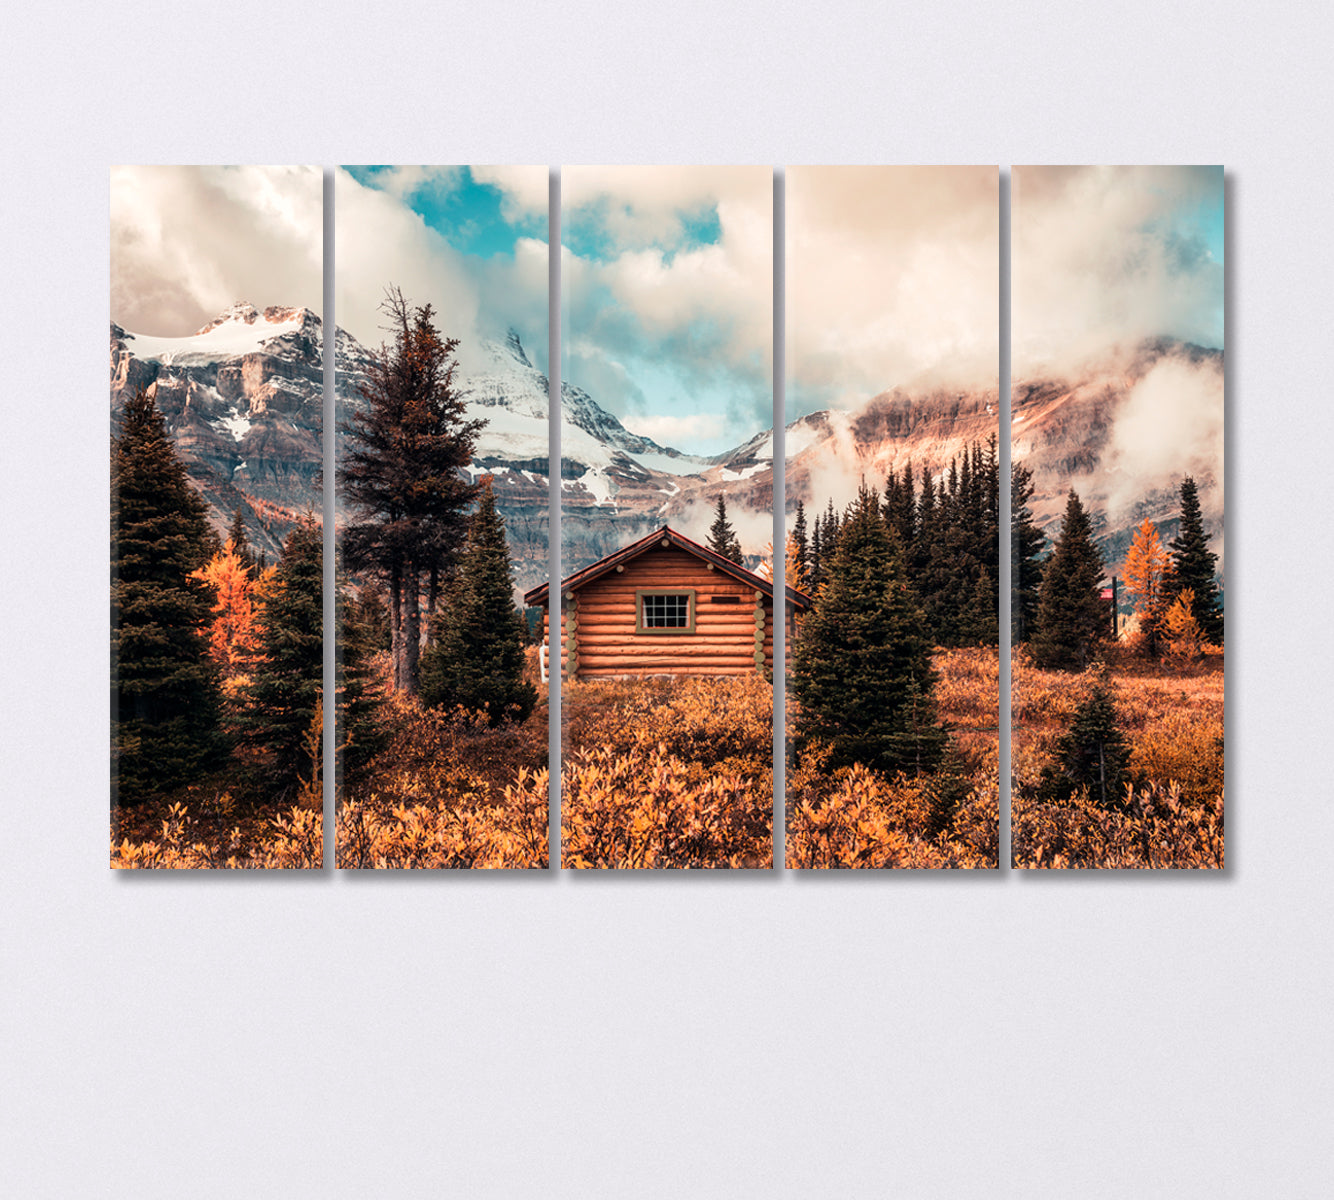 Wooden Hut with Mount Assiniboine in Autumn Canada Canvas Print-Canvas Print-CetArt-5 Panels-36x24 inches-CetArt